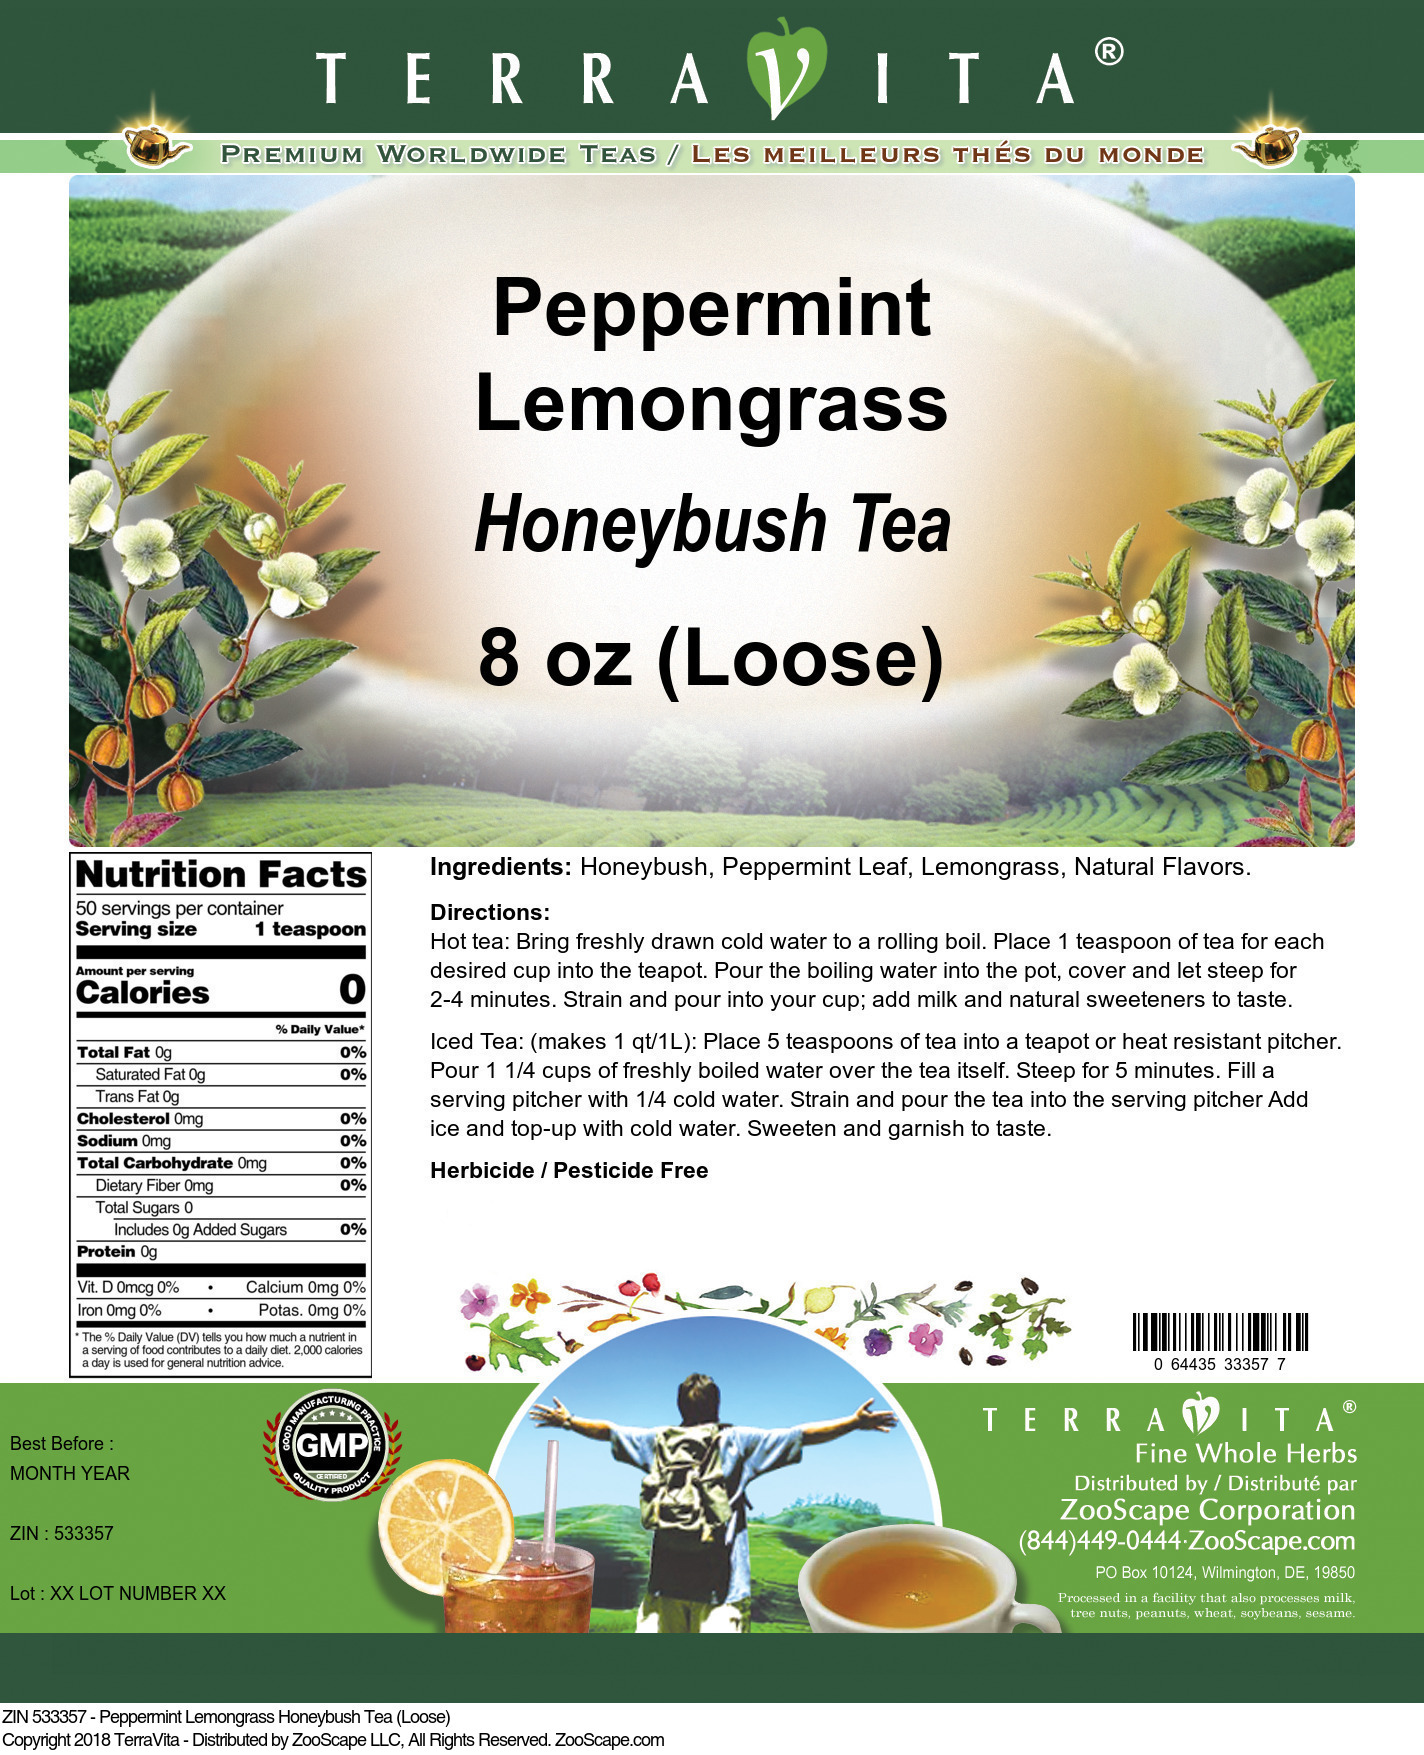 Peppermint Lemongrass Honeybush Tea (Loose) - Label